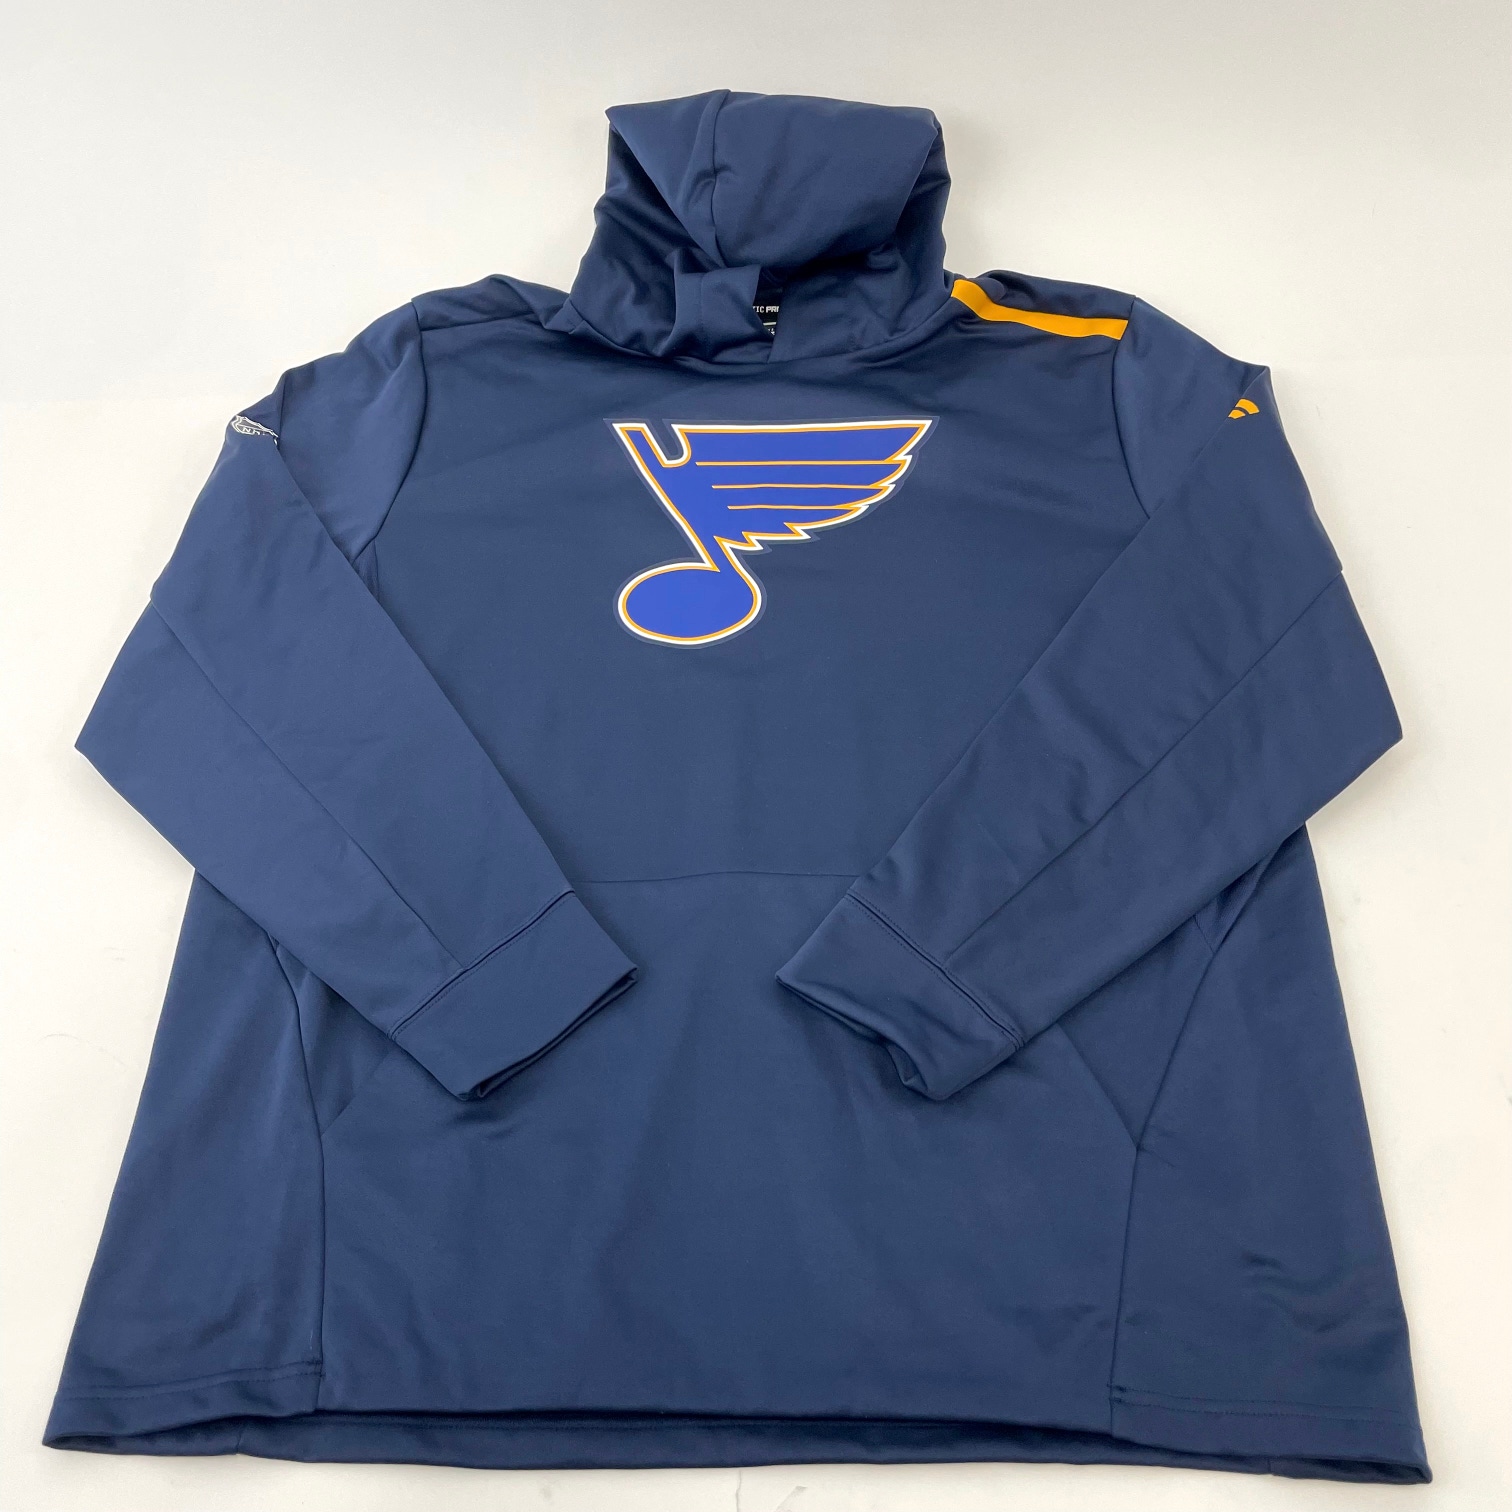 ( Player Issued ) - Navy Blue Fanatics Pro Team Issued Sweatshirt St. Louis Blues